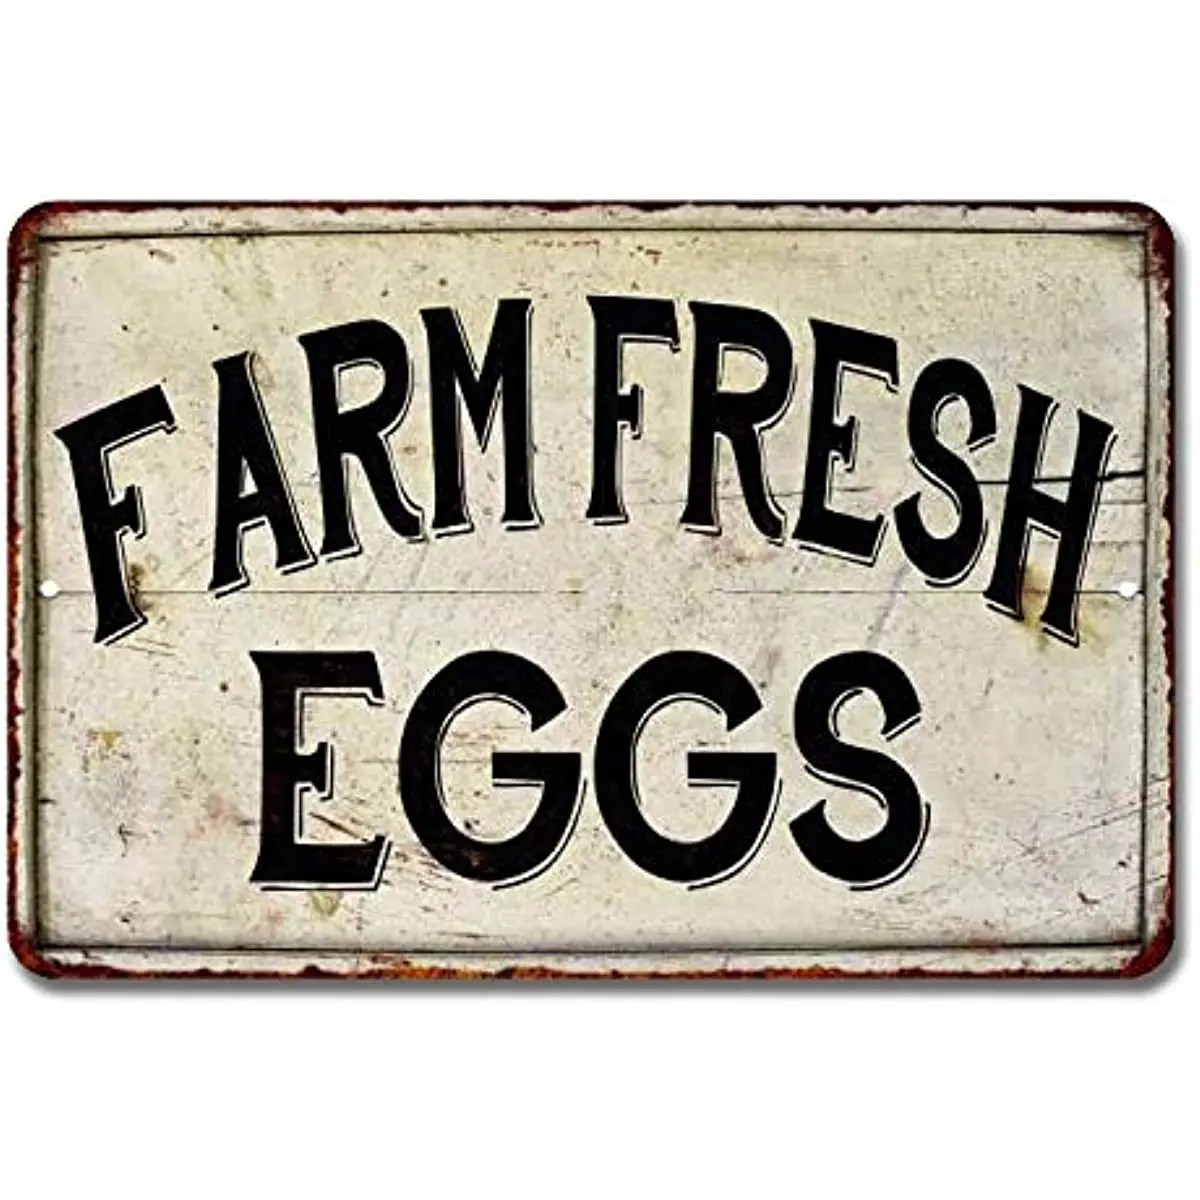 

Farm Fresh Eggs Sign Vintage Sweet Decor Chicken Coop Decorations Barnyard Sale Hen House Rustic Tin Wall Art High Gloss Metal